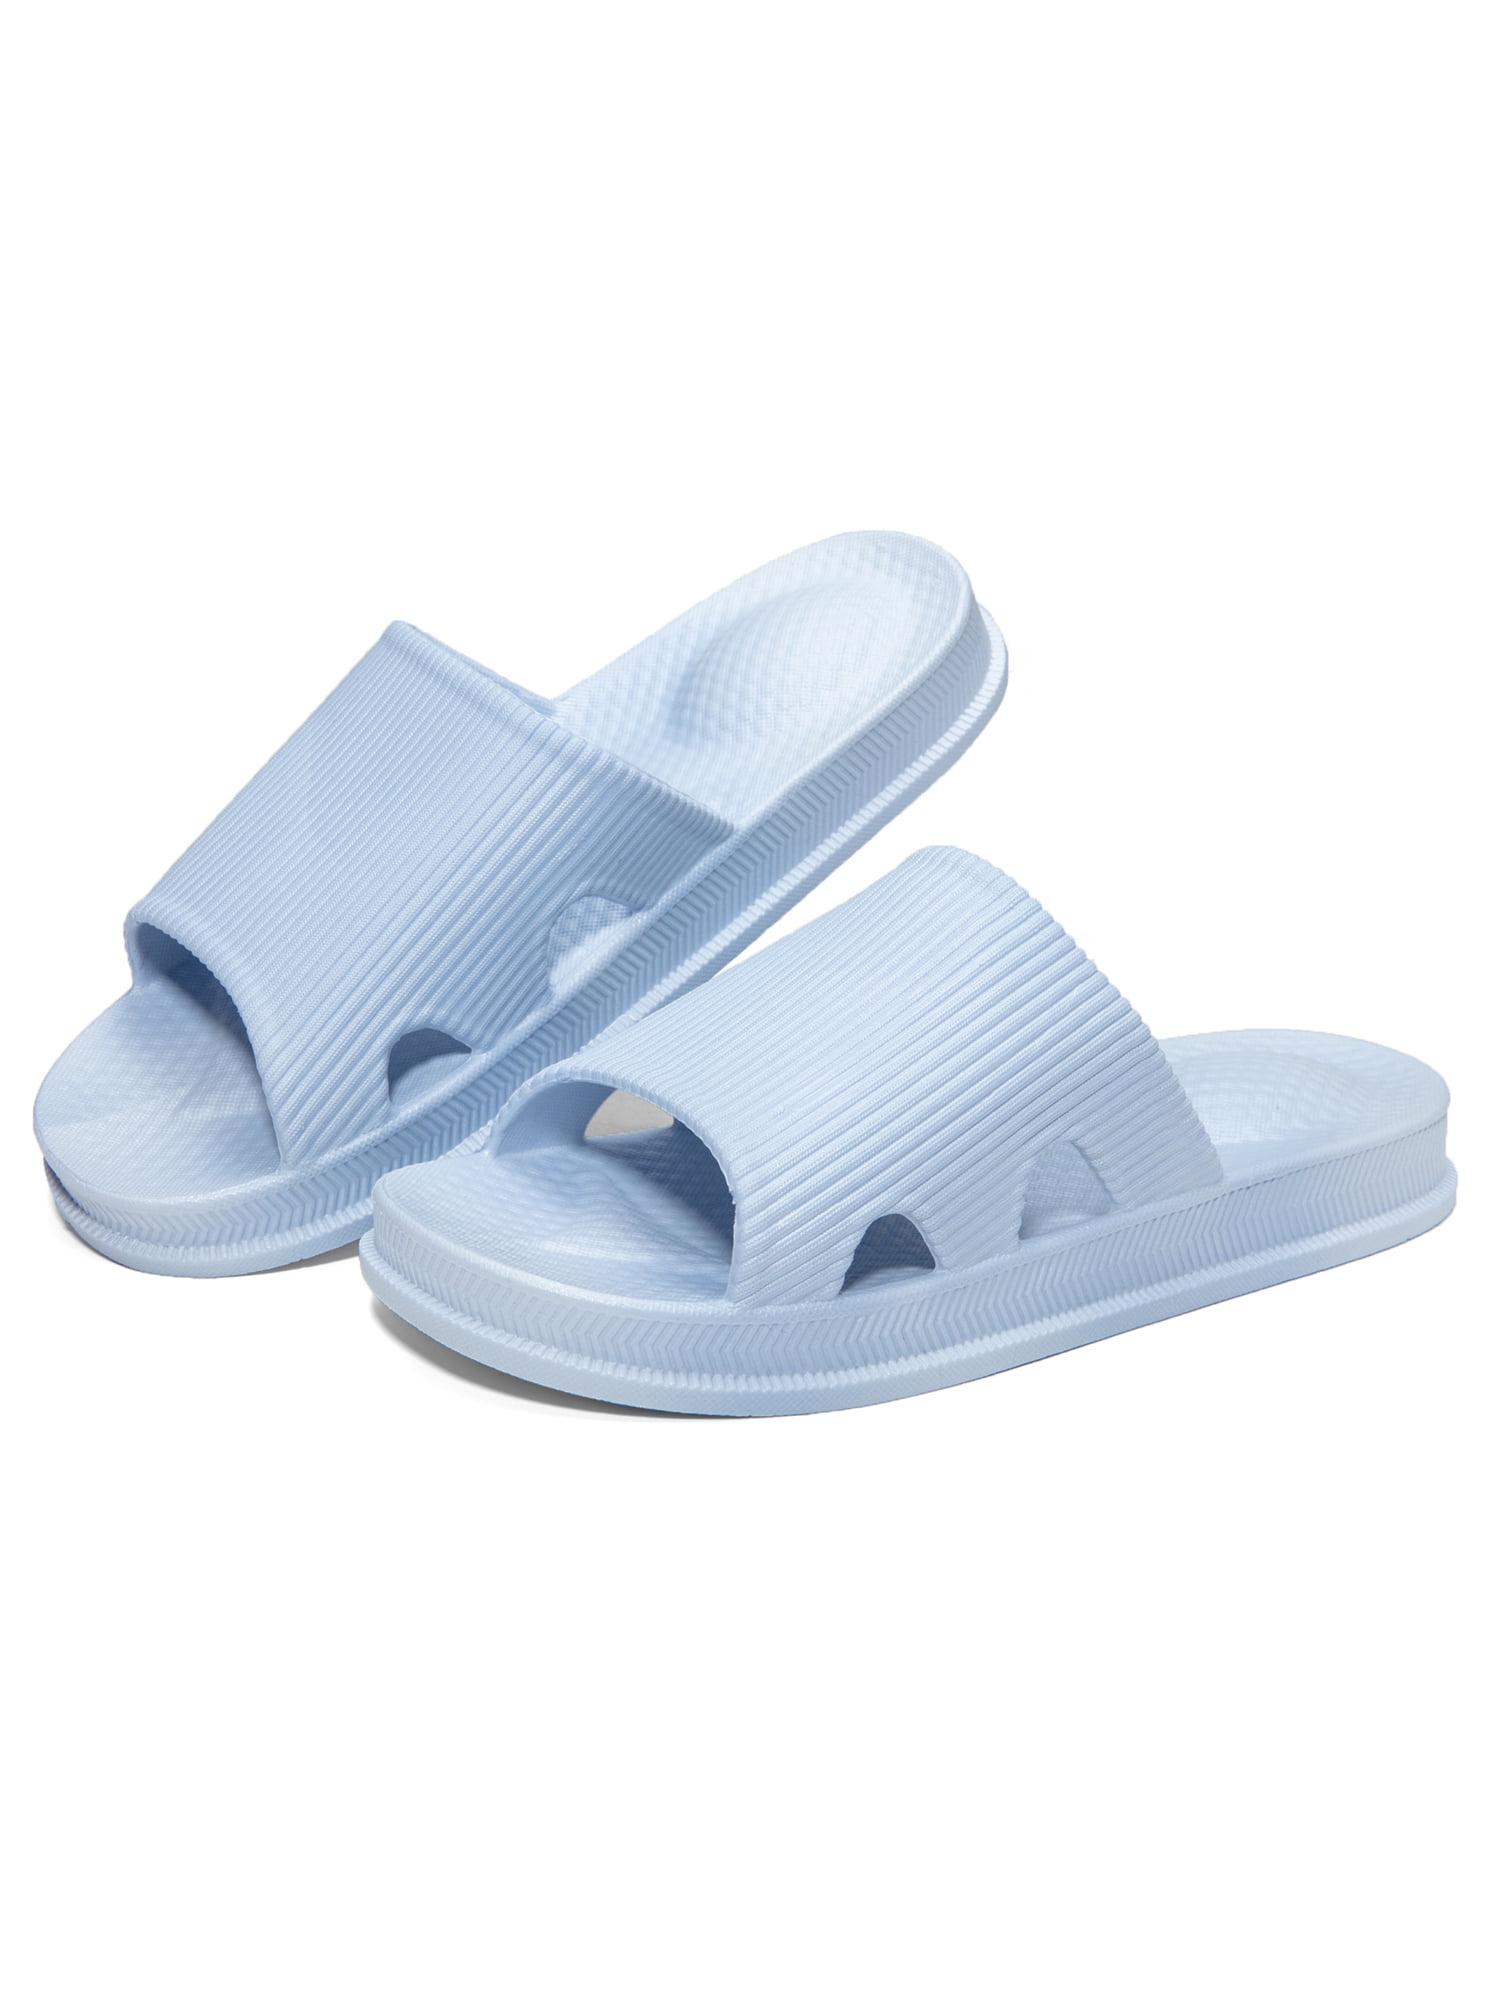 Men's/Women's Slippers Sliders Flip Flops Beach & Pool Shoes with Massage Point Slide Slip On Shower Sandals Shoes Open Toe Summer Mules Fitness Shoes Non-Slip Poolside,6 Colors 3-9.5UK 